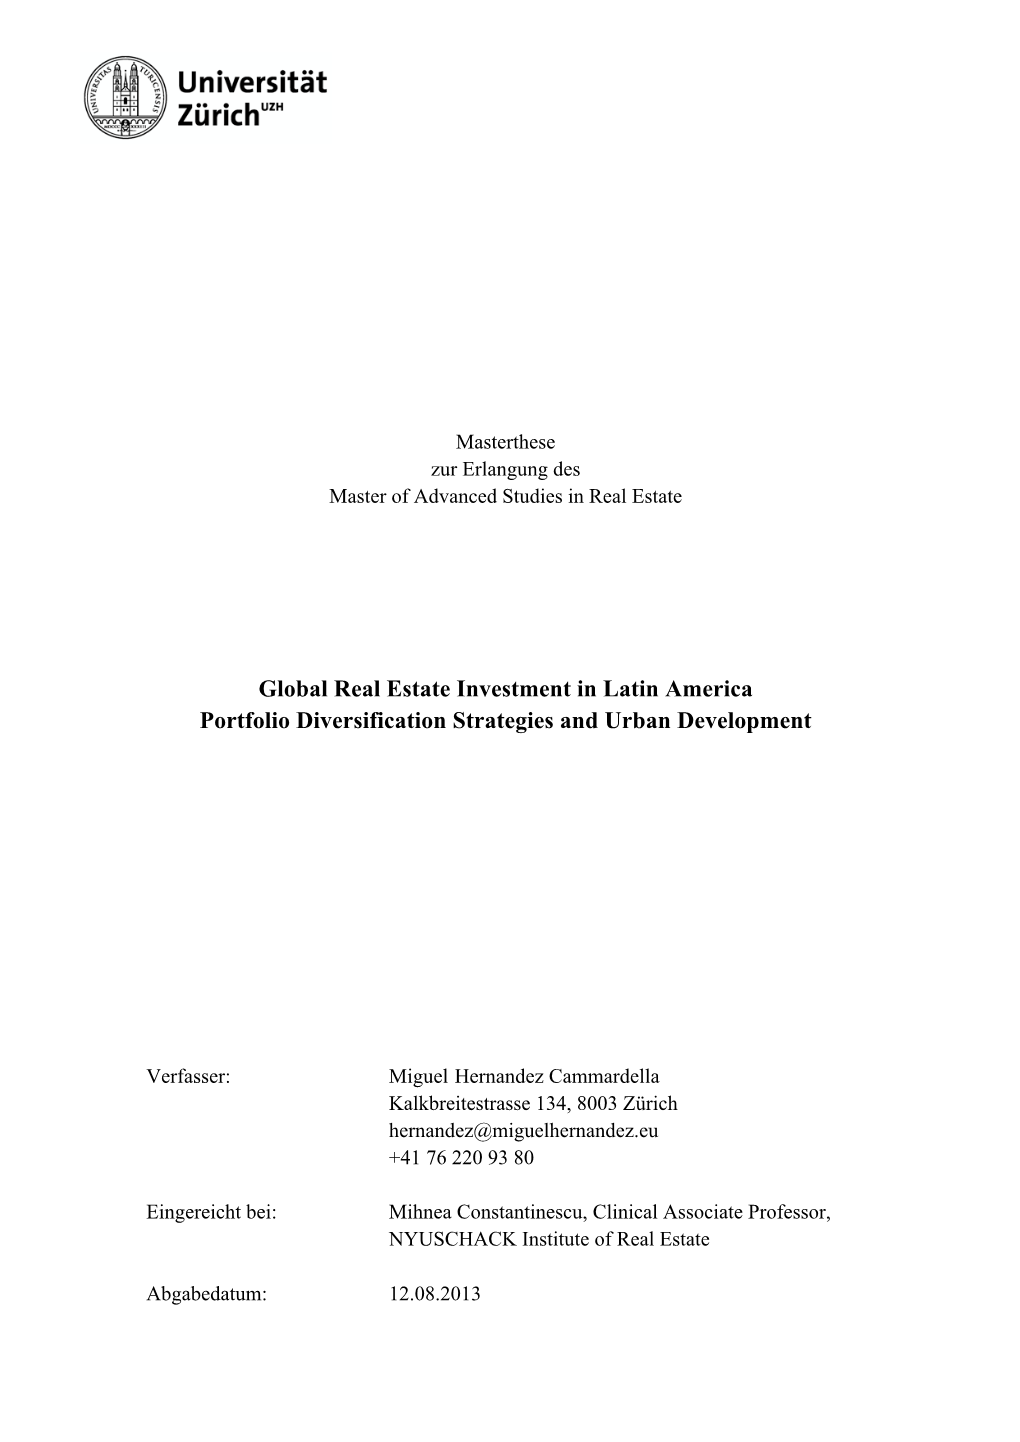 Global Real Estate Investment in Latin America Portfolio Diversification Strategies and Urban Development